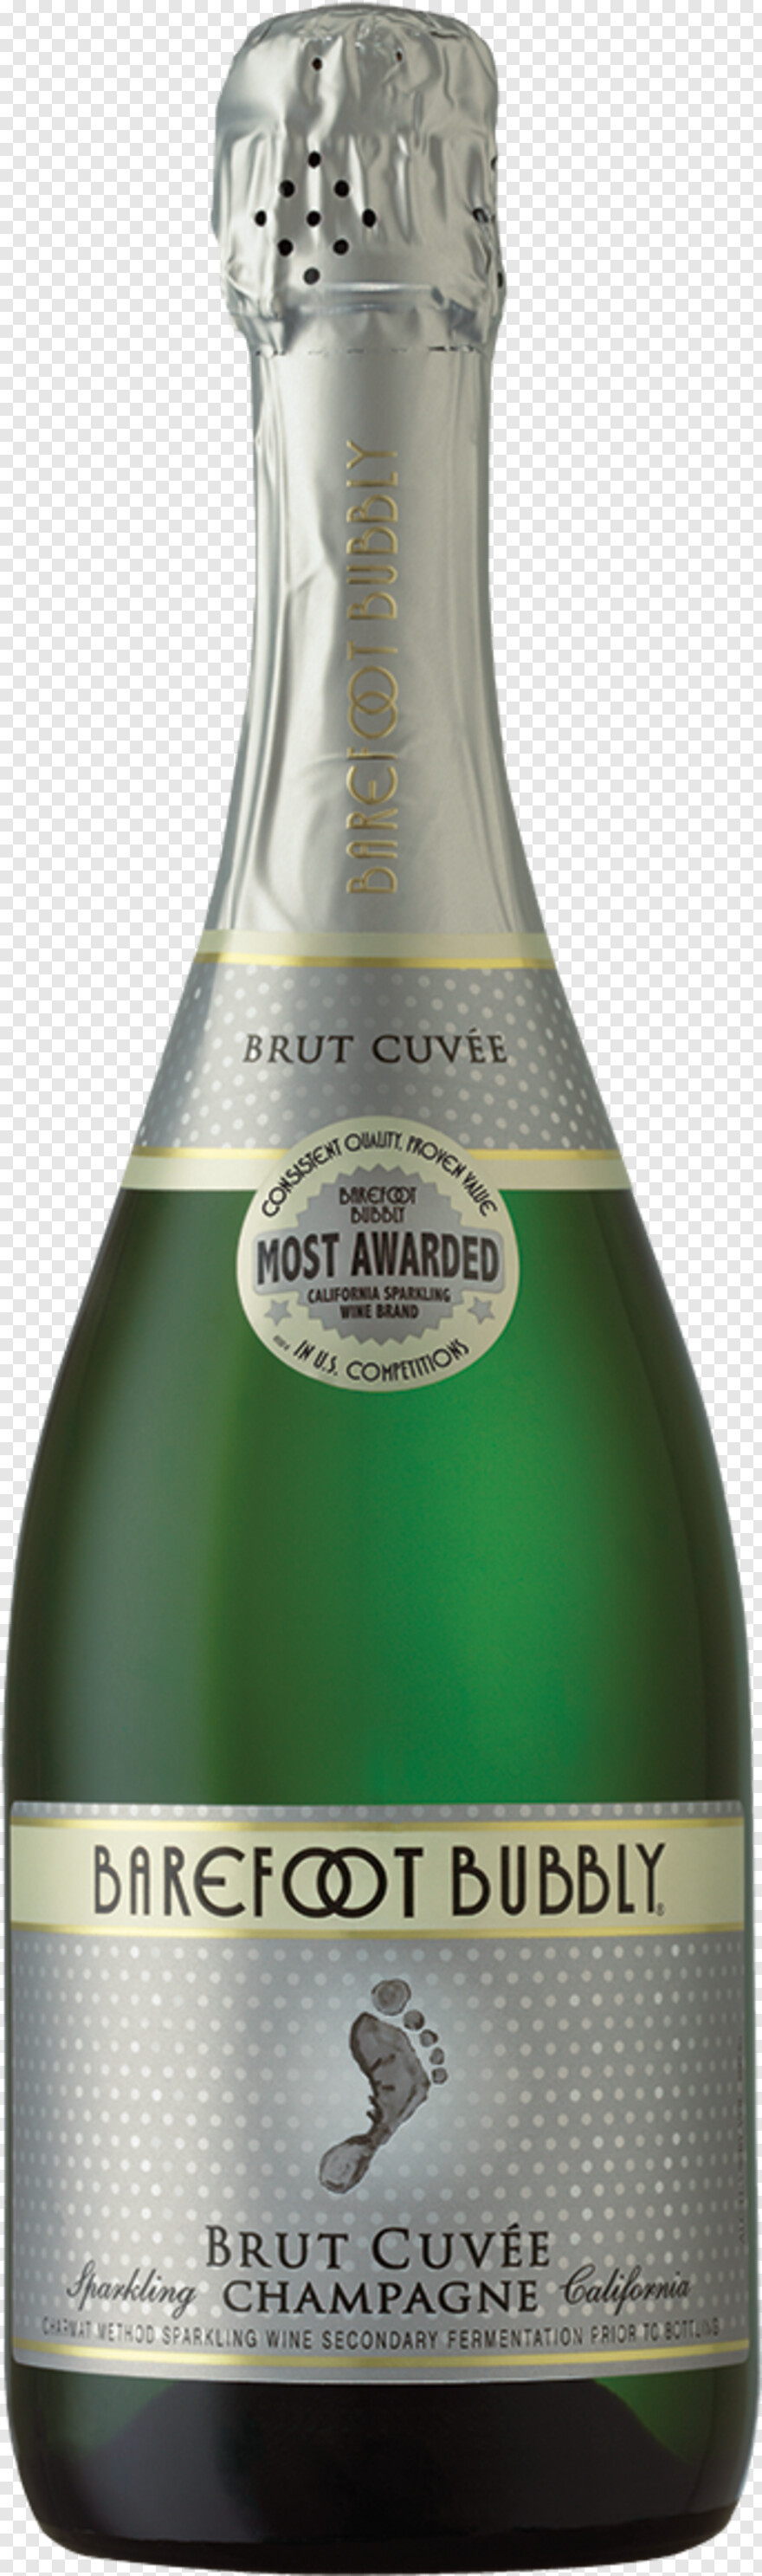 champagne-bubbles # 1107314